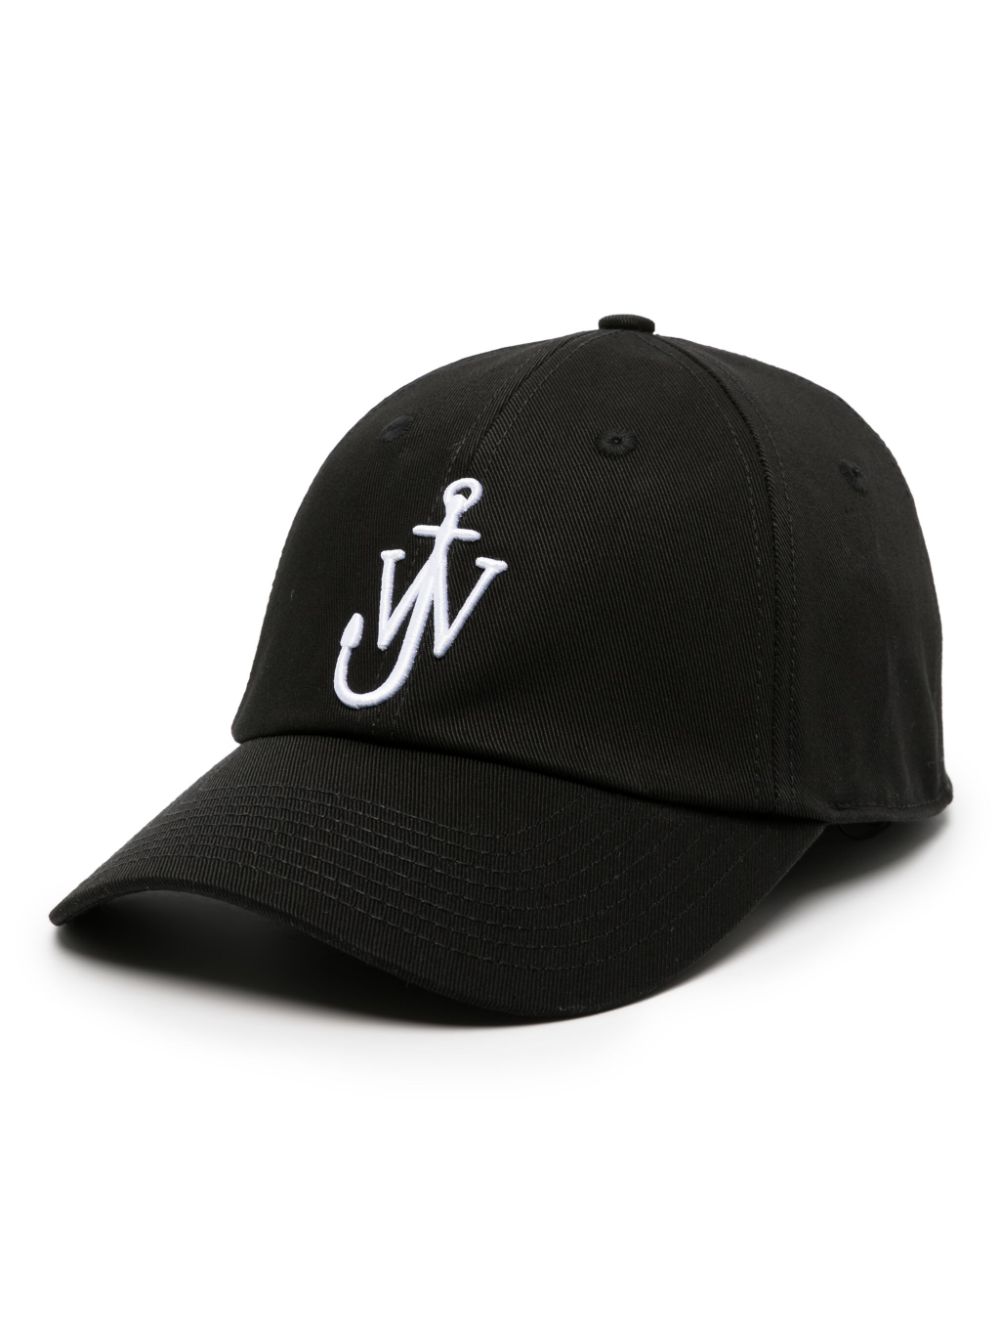 Embroidered-logo baseball cap<BR/><BR/><BR/>